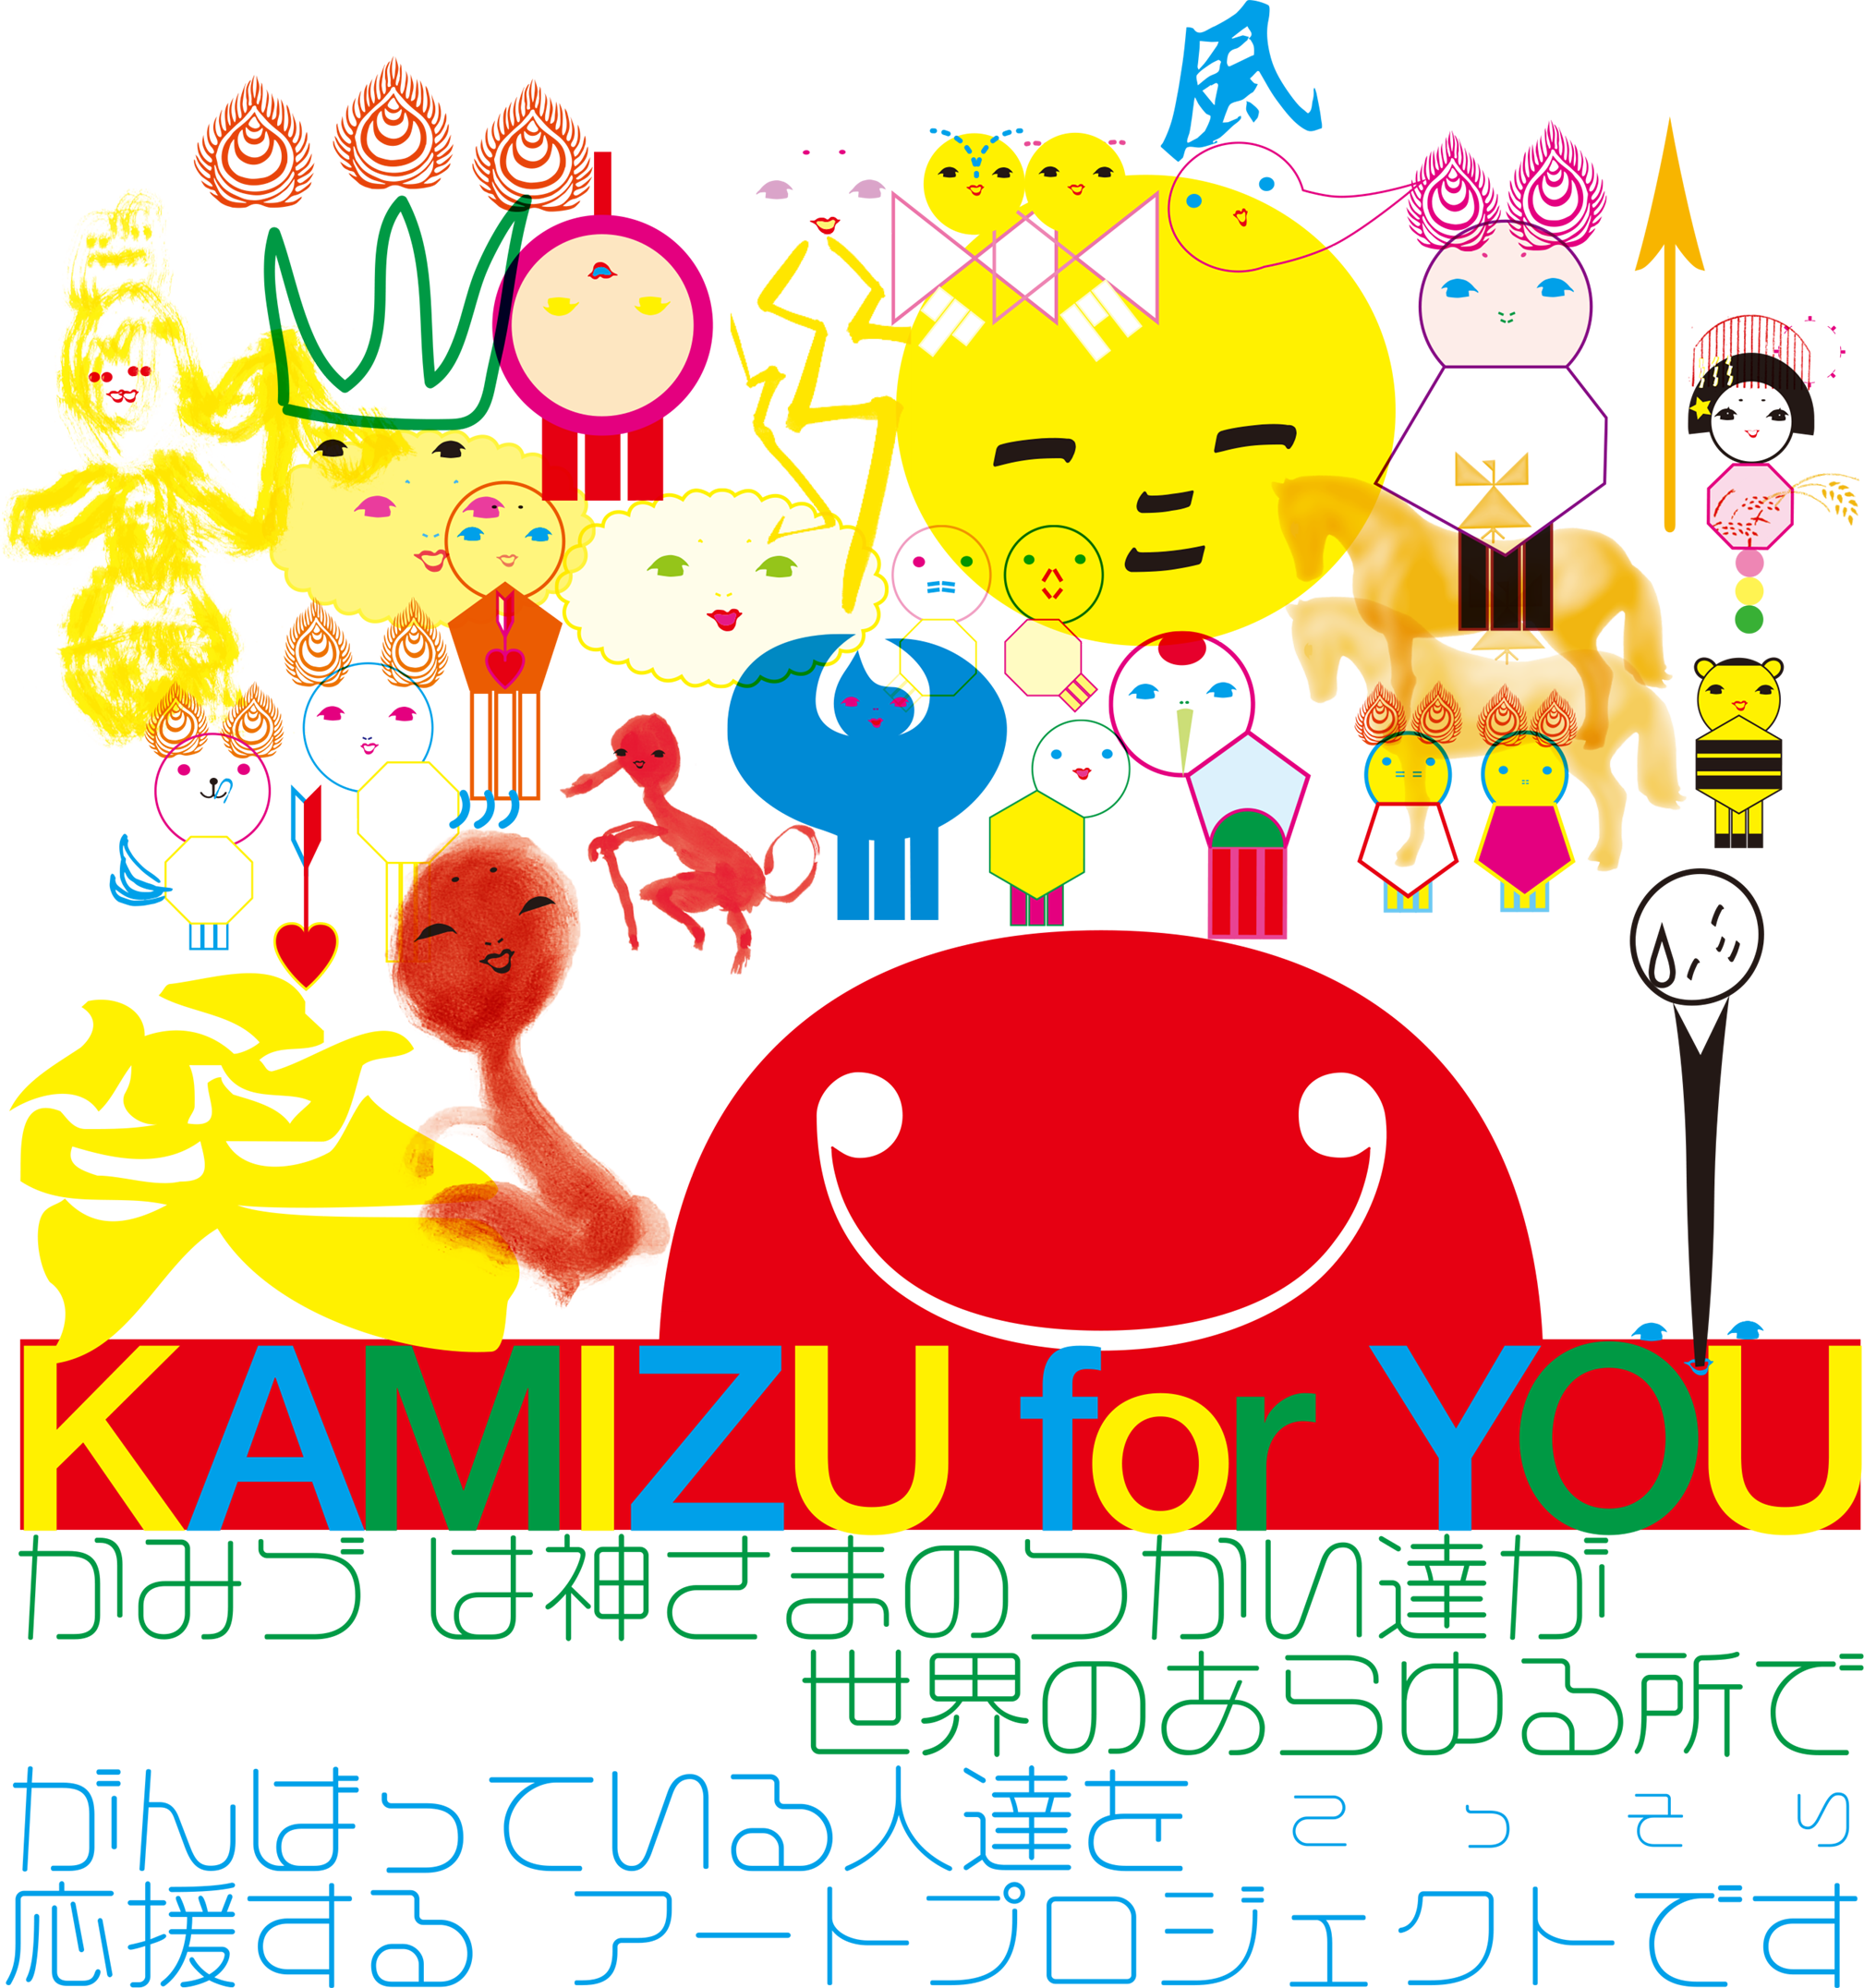 KAMIZU supports for YOU KAMIZUは神さまのつかい達が世界のあらゆる所でがんばっている人達をこっそり応援するアートプロジェクトです。